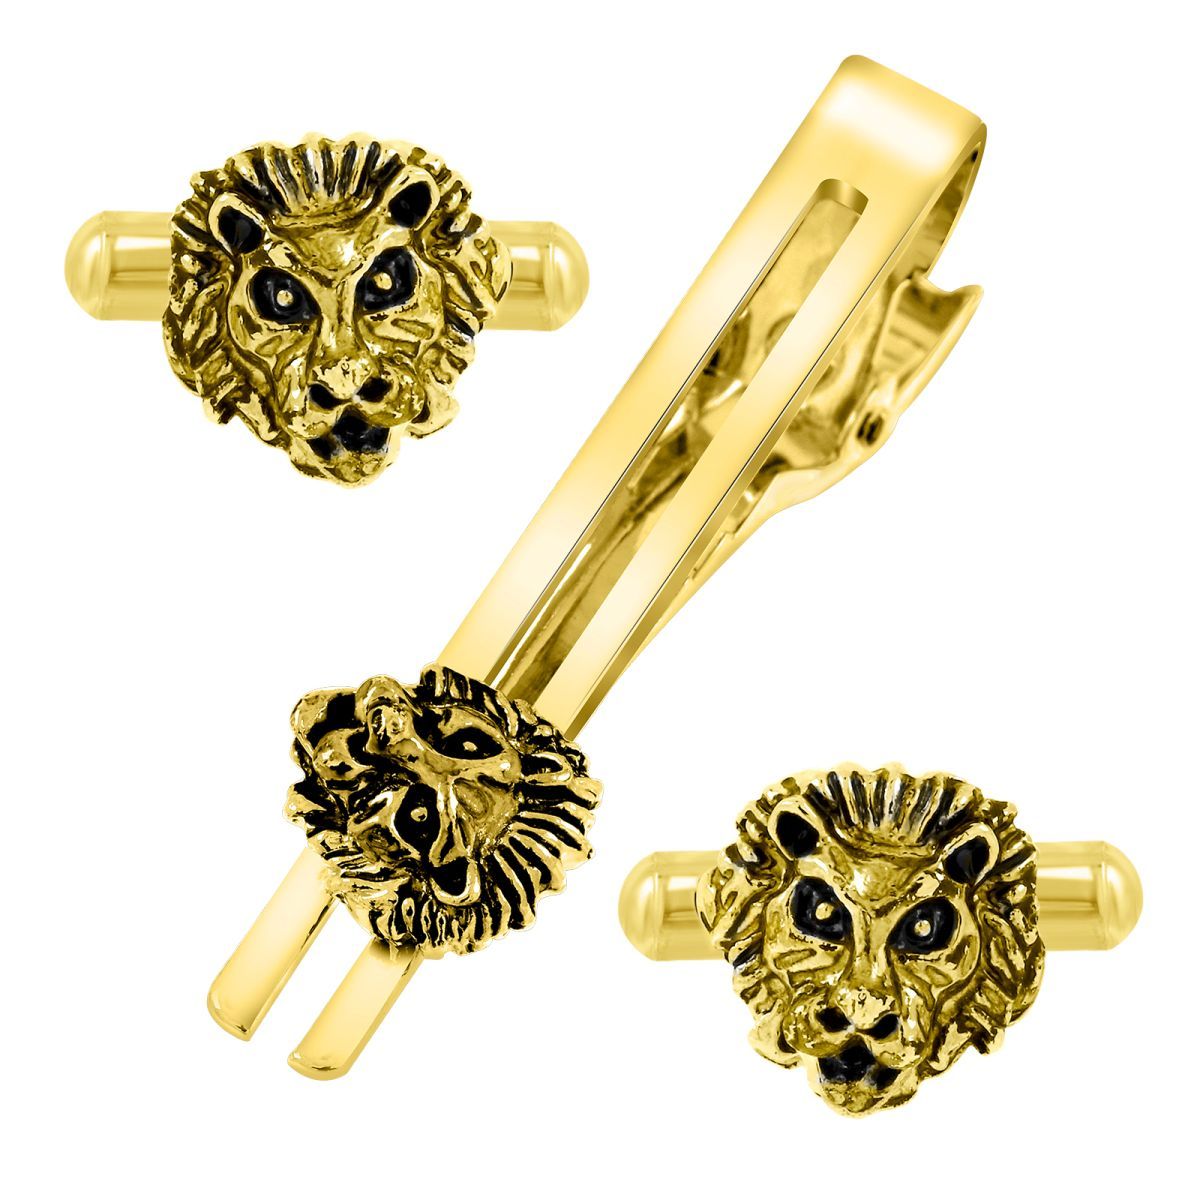 Lion Gold Oxidised Cufflinks Tie Pin Set Box